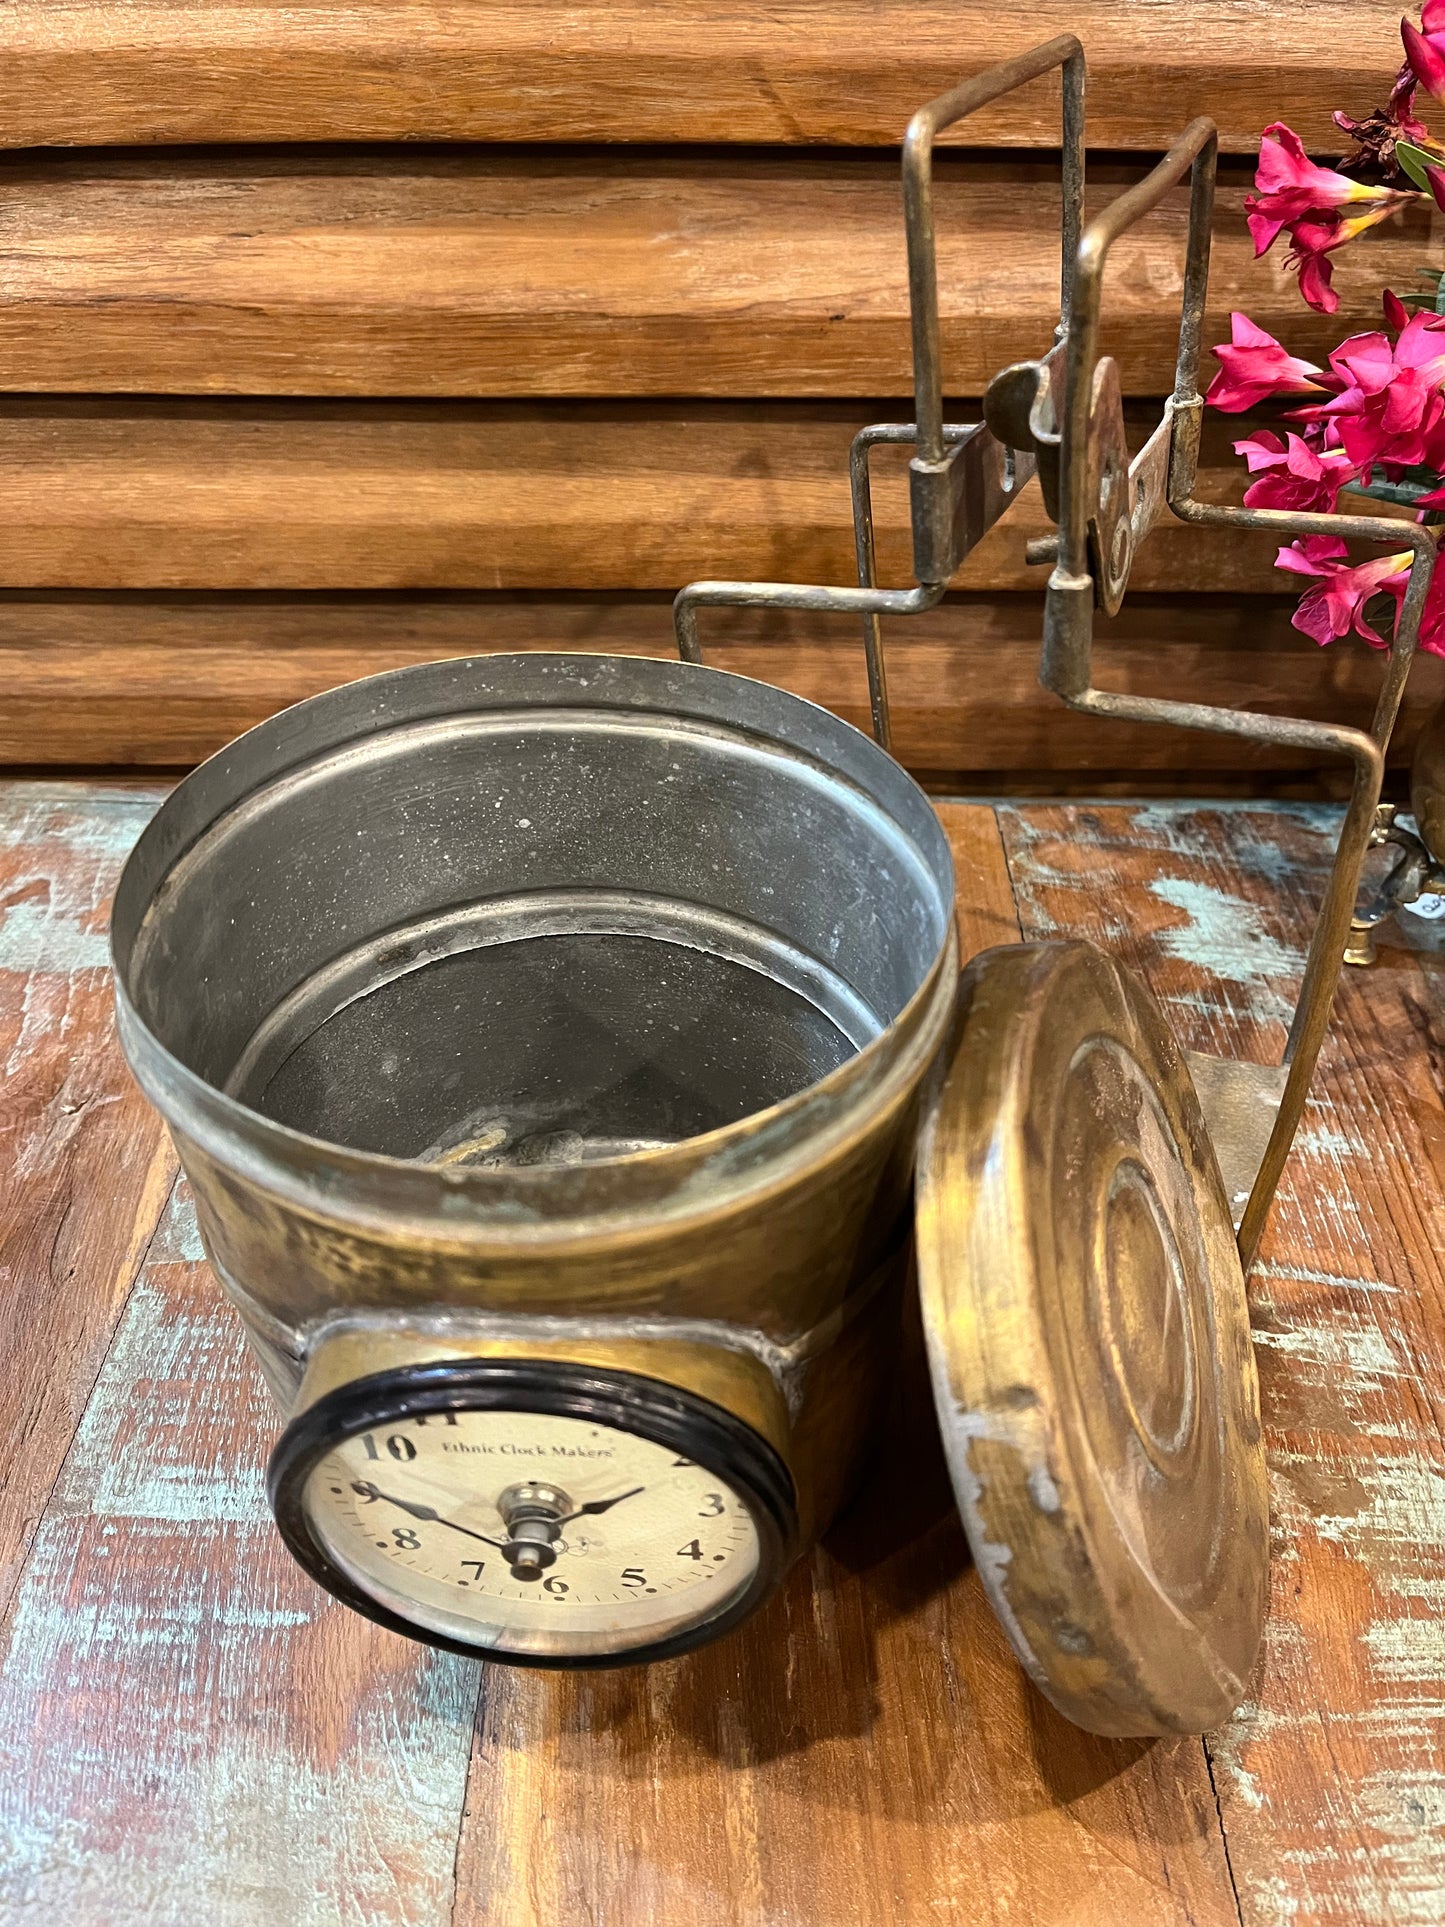 Vintage Brass Lunch Box Clock